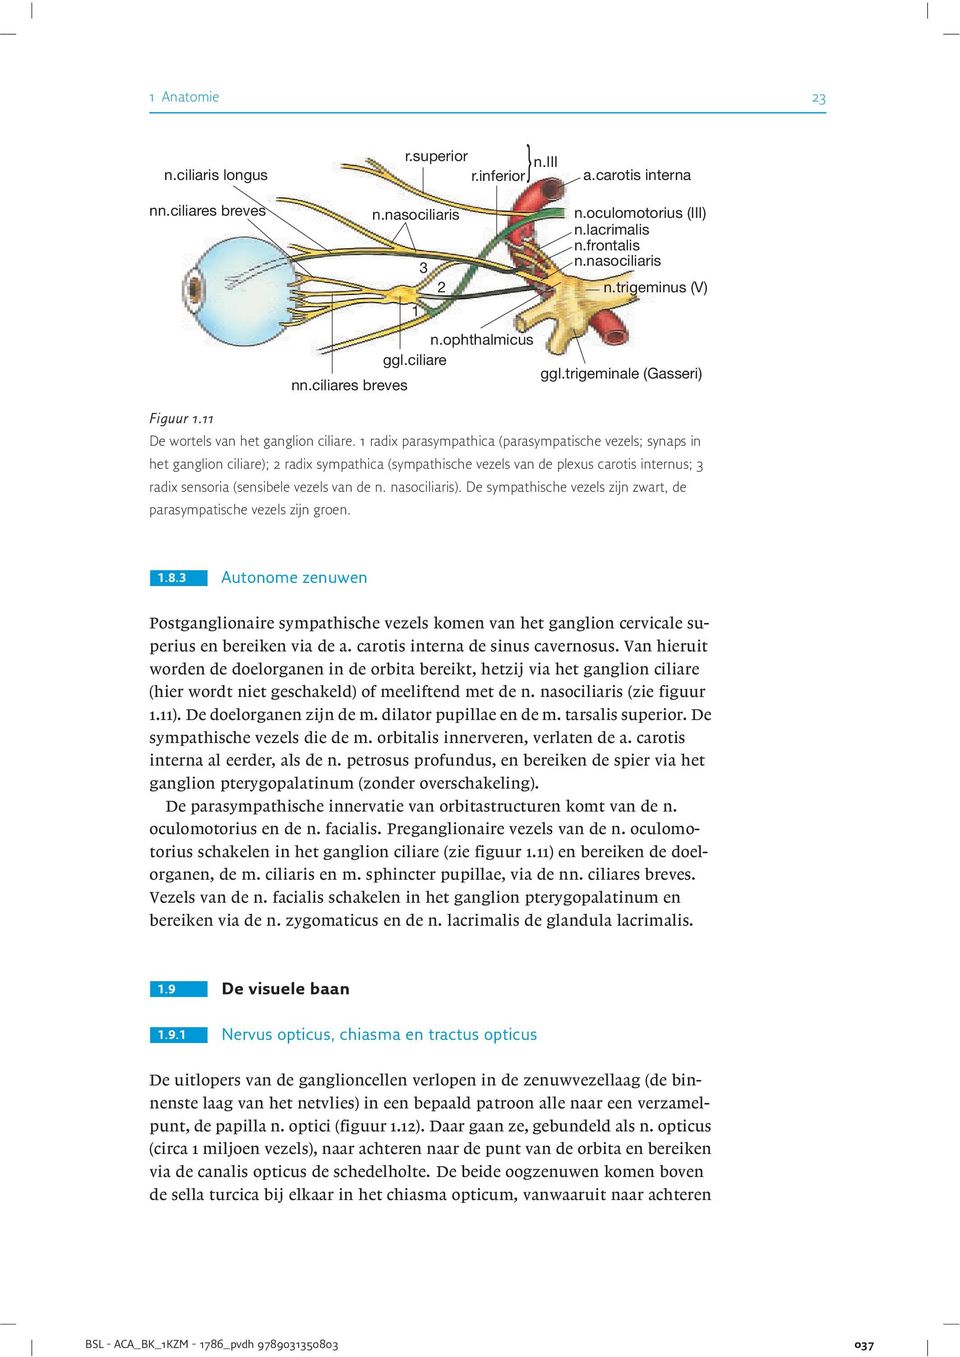 1 radix parasympathica (parasympatische vezels; synaps in het ganglion ciliare); 2 radix sympathica (sympathische vezels van de plexus carotis internus; 3 radix sensoria (sensibele vezels van de n.